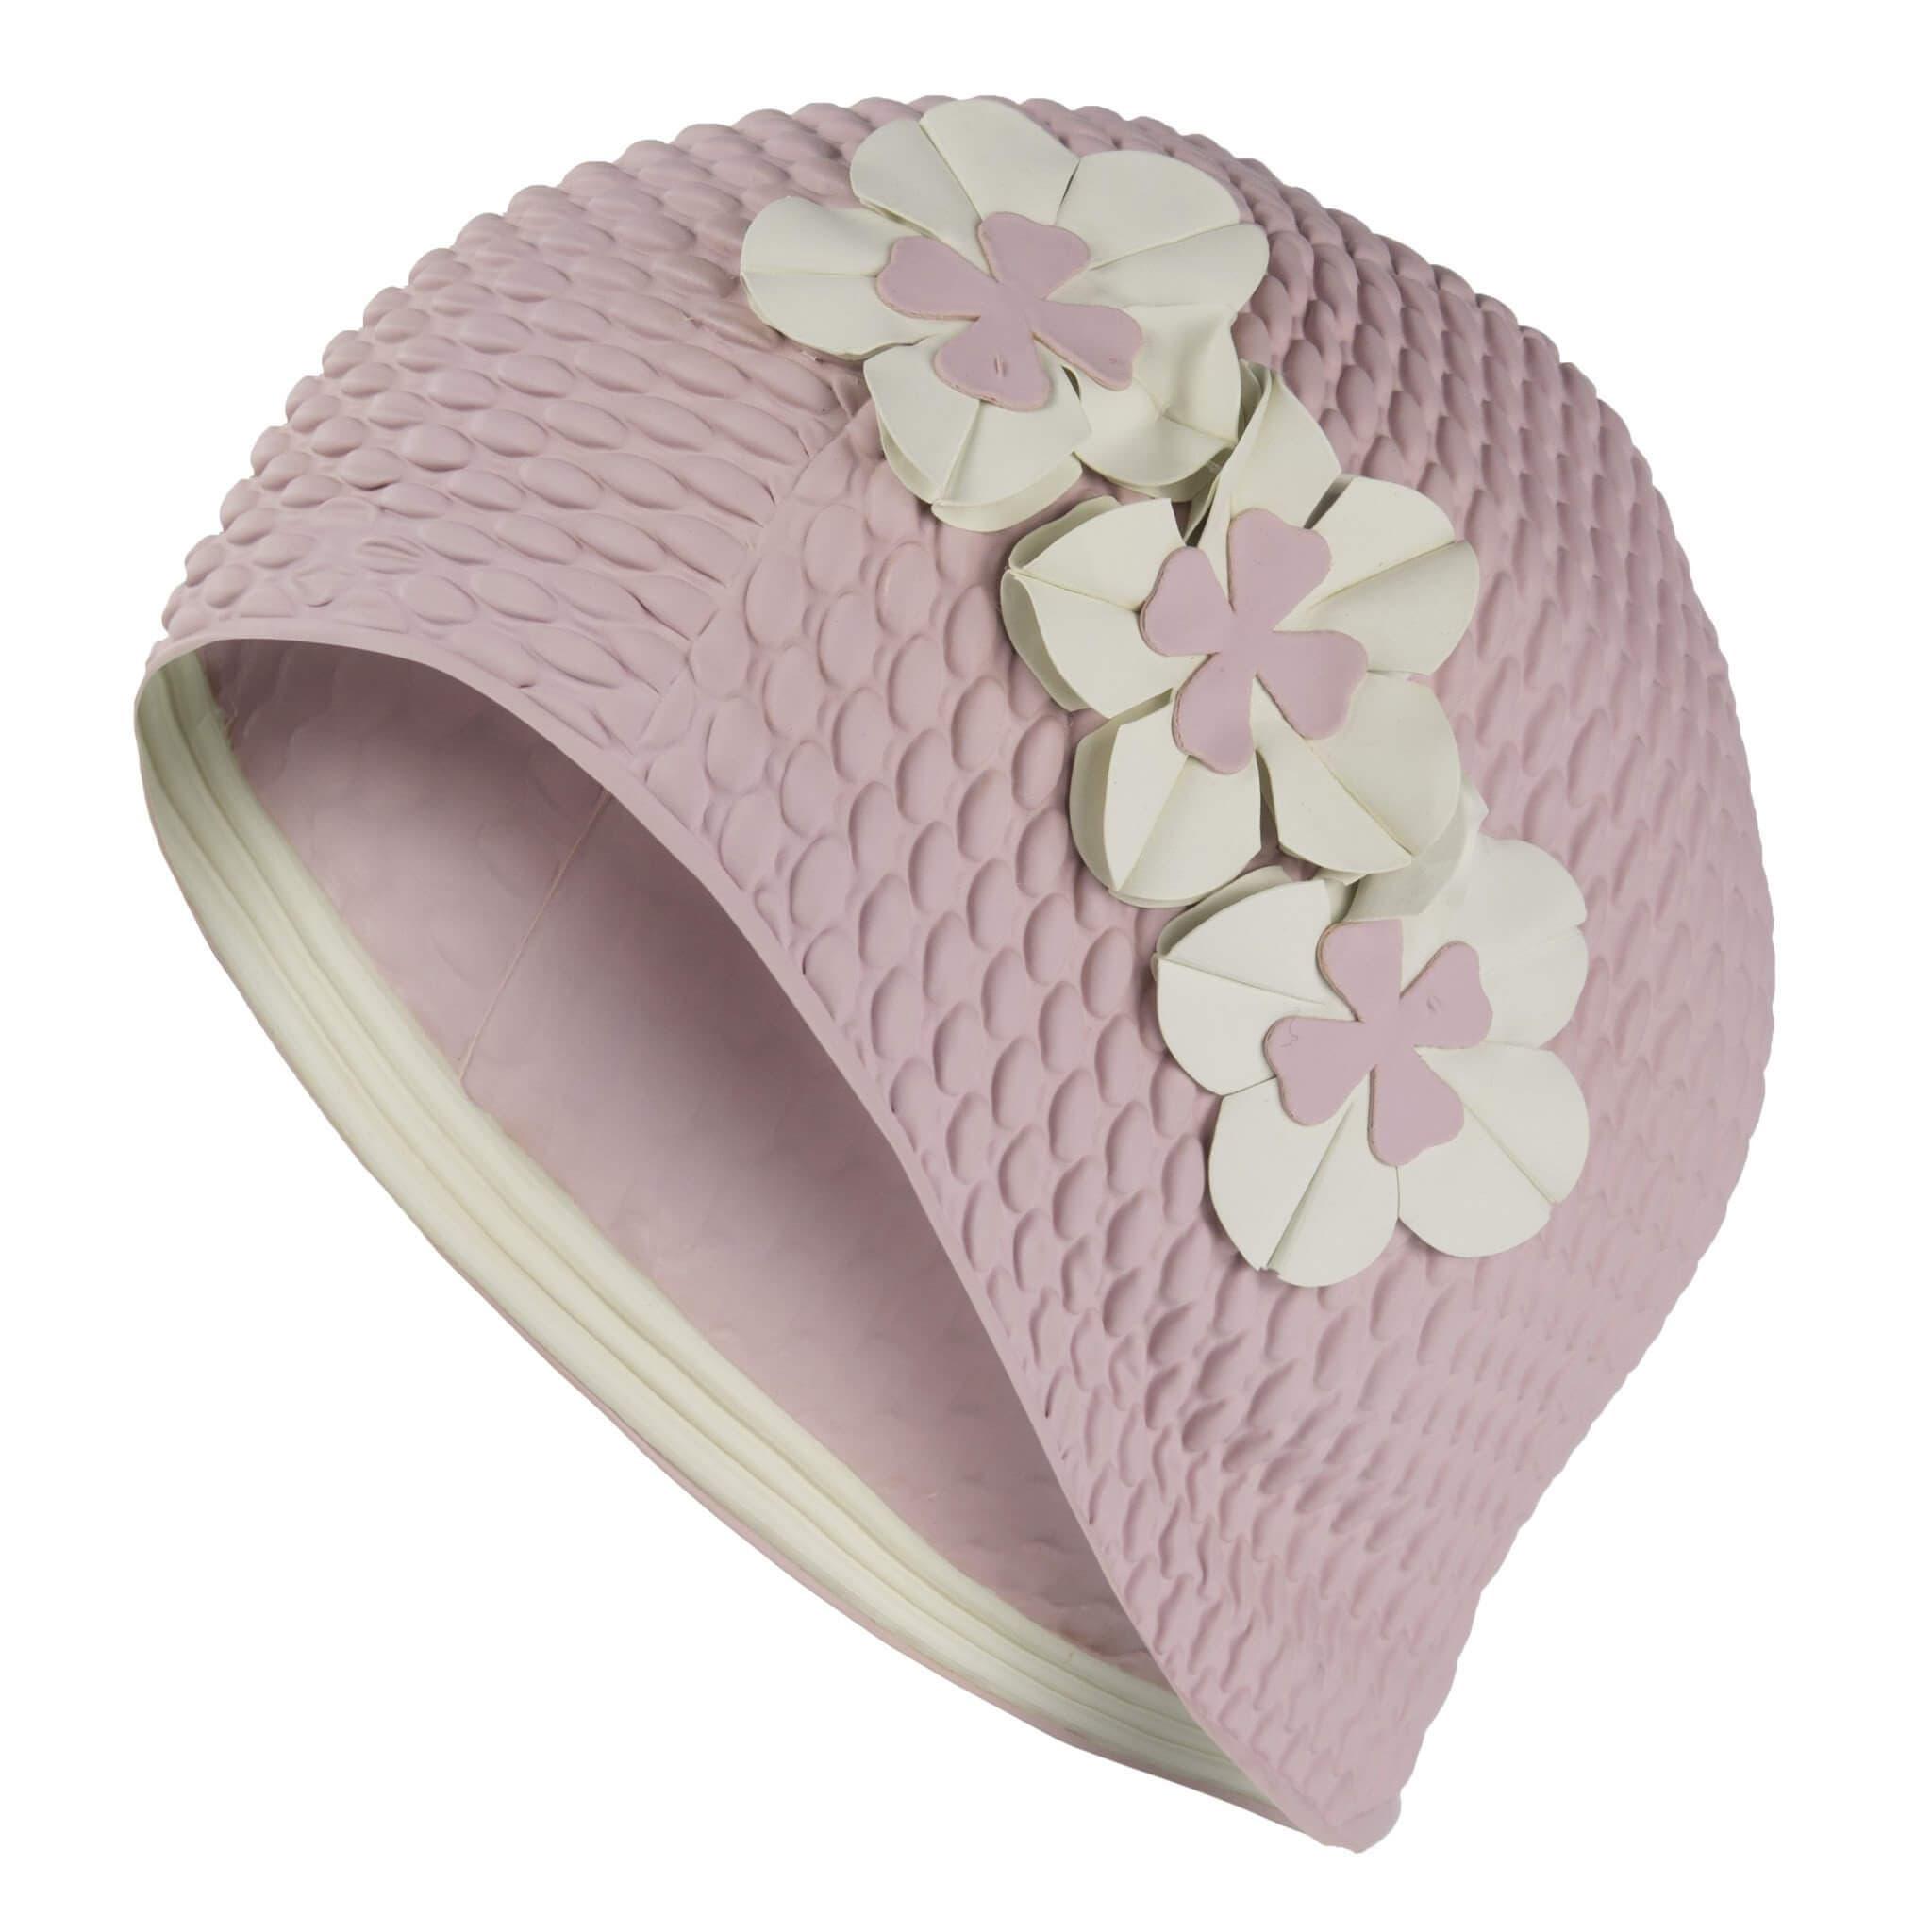 Flower Swim Caps Women Soft Three dimensional Petals Swim Hat for